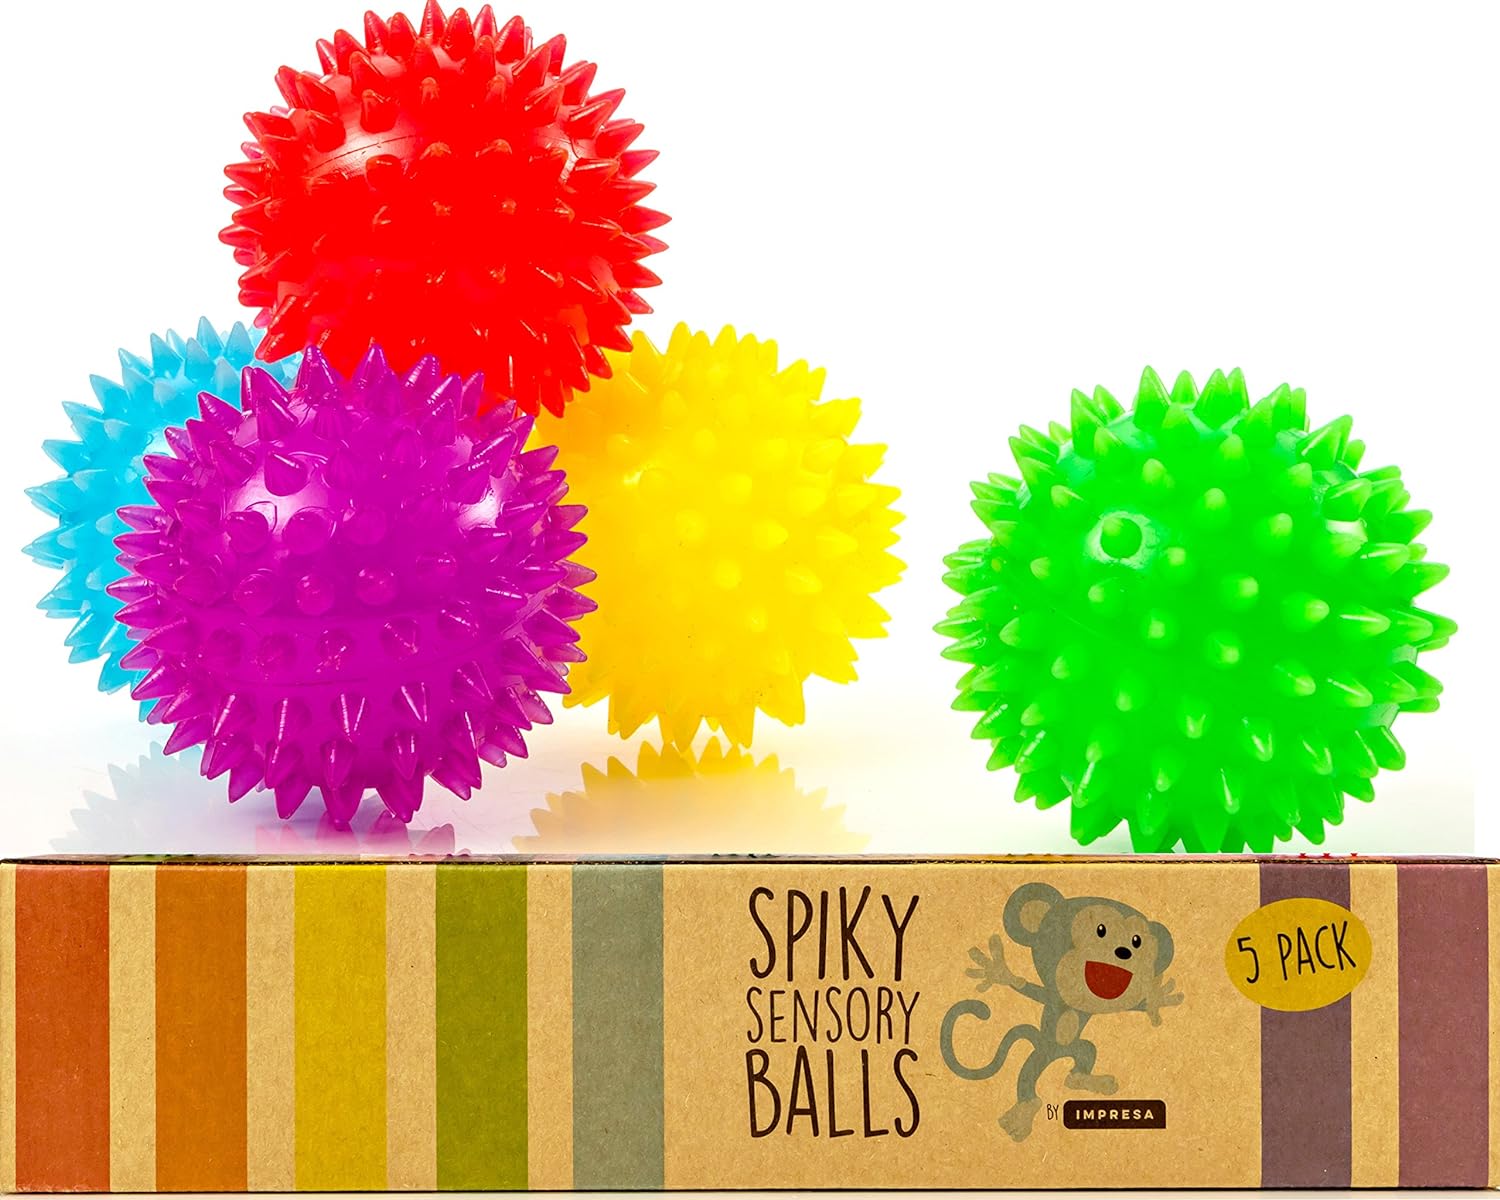 Spiked senosry balls